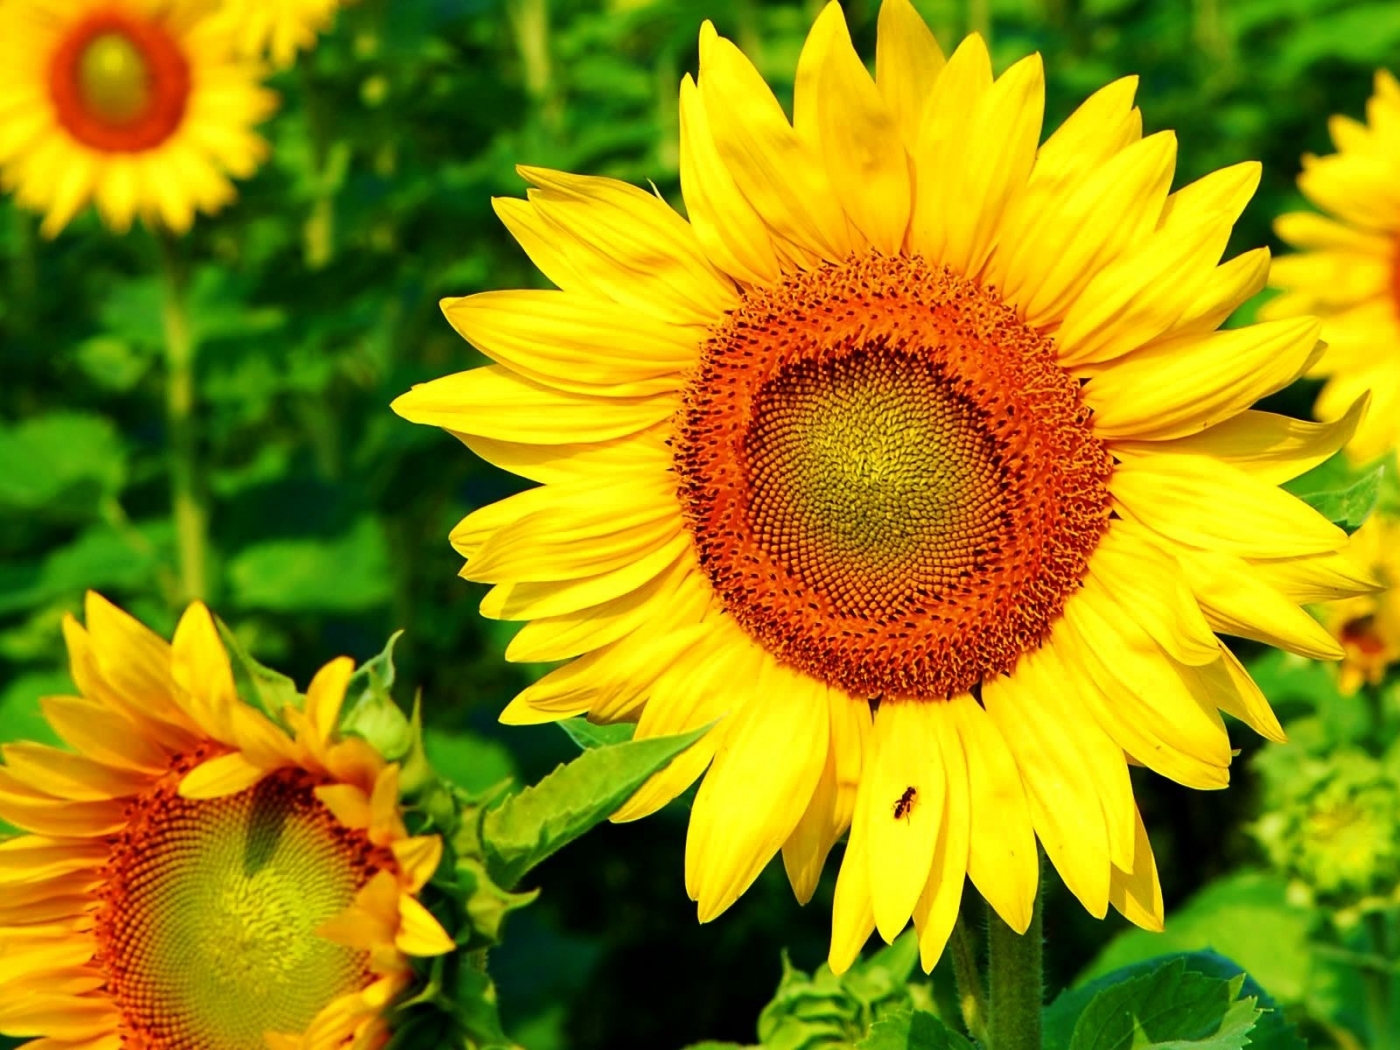 plants, sunflowers Image for desktop